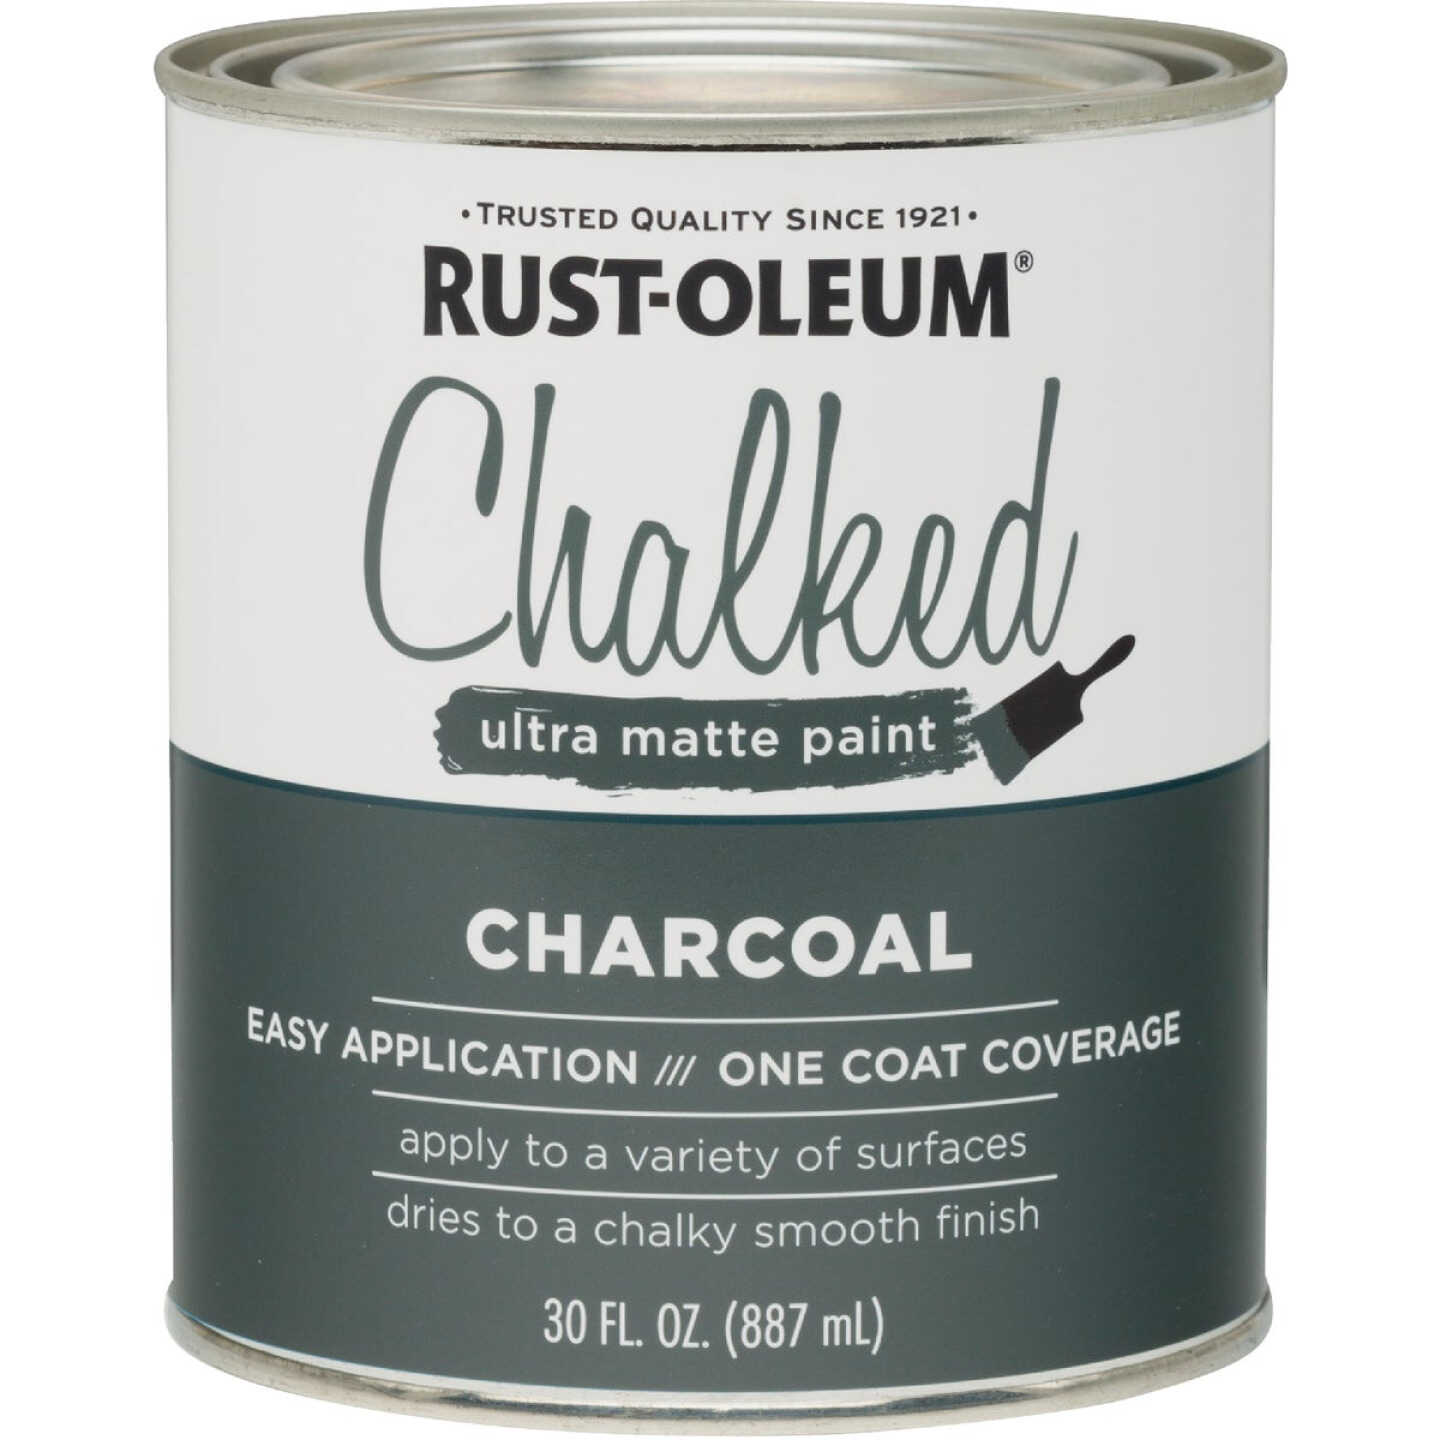 Rust-Oleum Chalked Ultra Matte Paint - 285143, Quart, Aged Gray